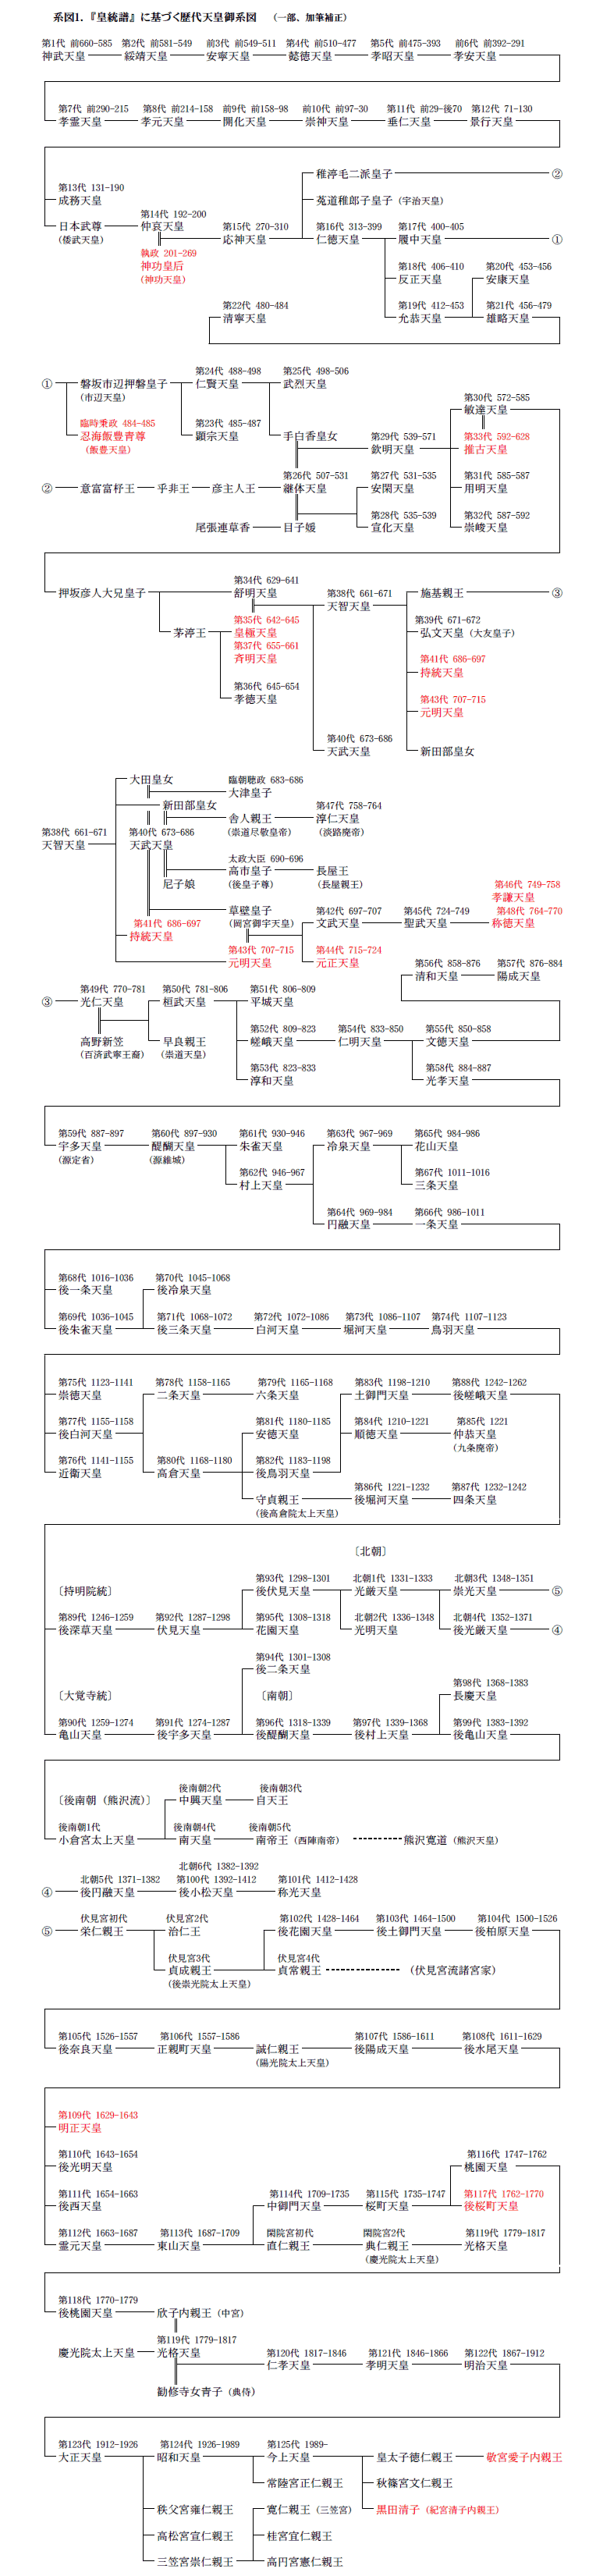 図1．『皇統譜』に基づく歴代天皇御系図（一部、加筆・補正）